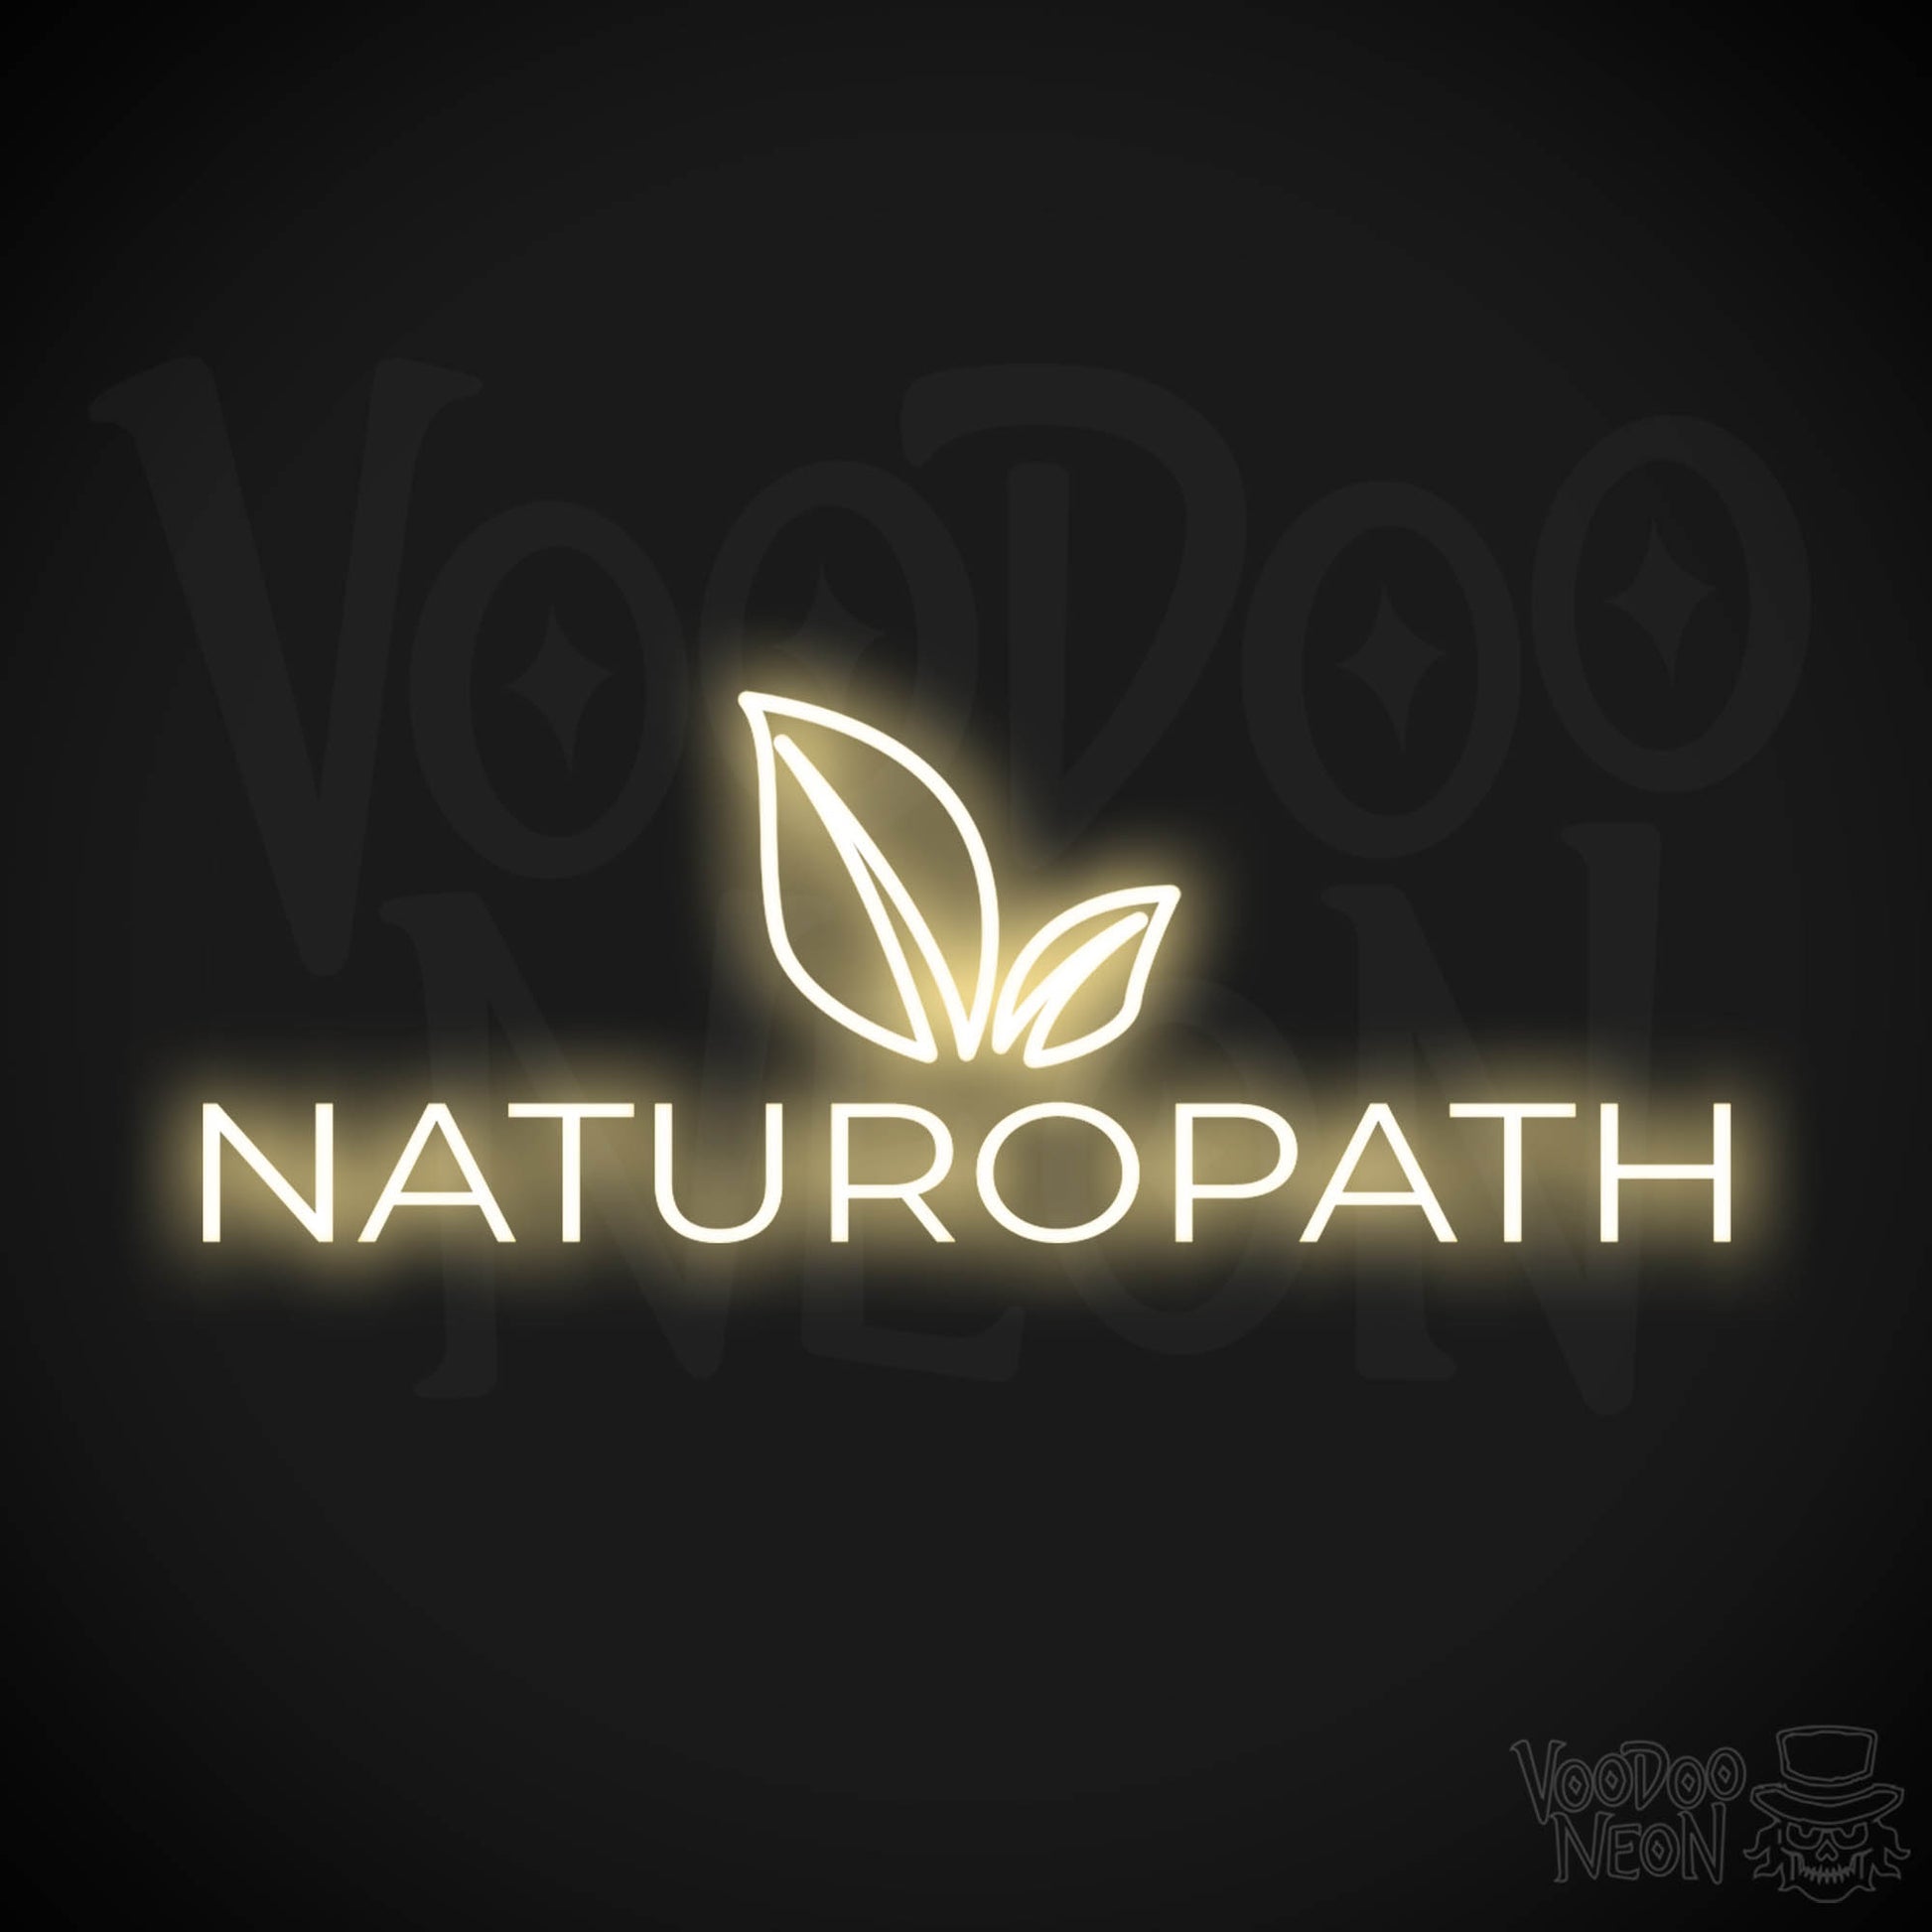 Naturopath LED Neon - Warm White